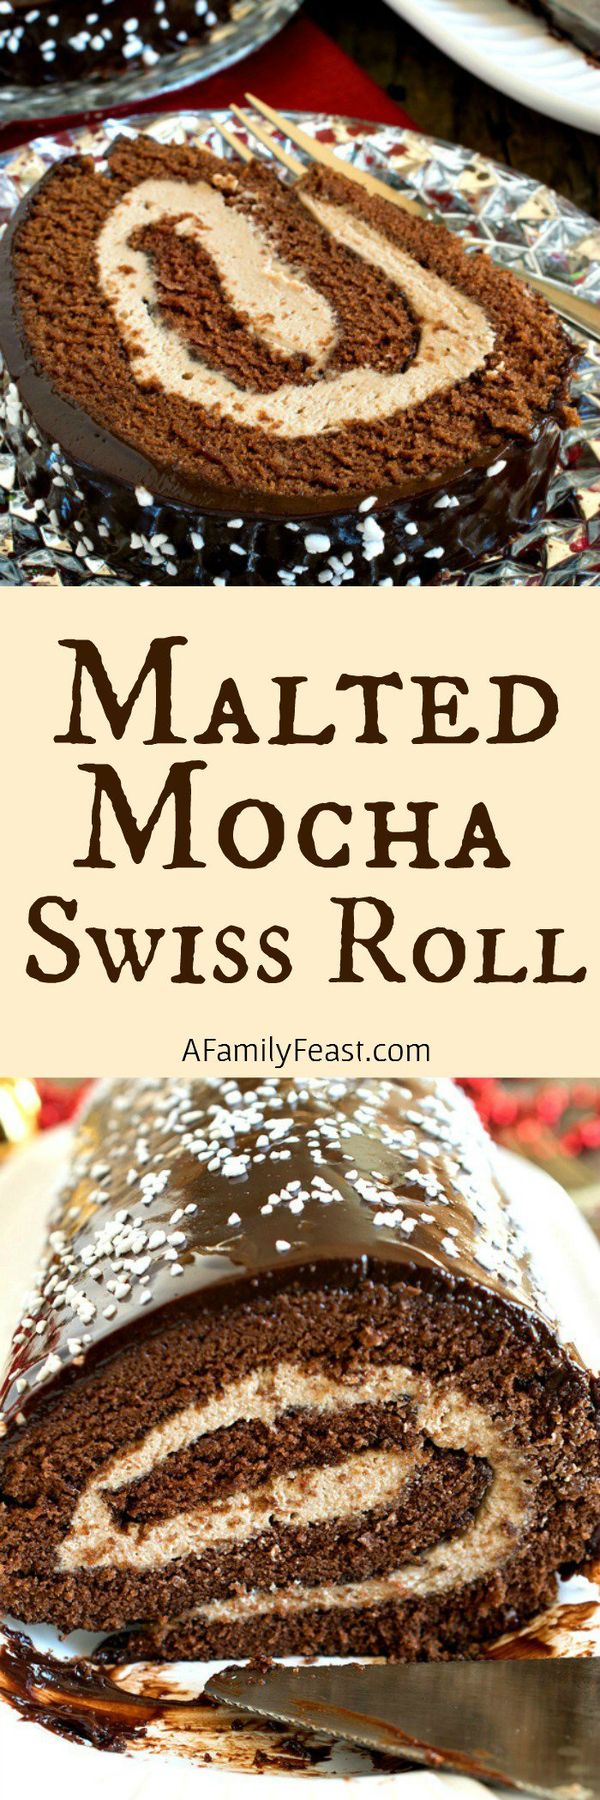 Malted Mocha Swiss Roll